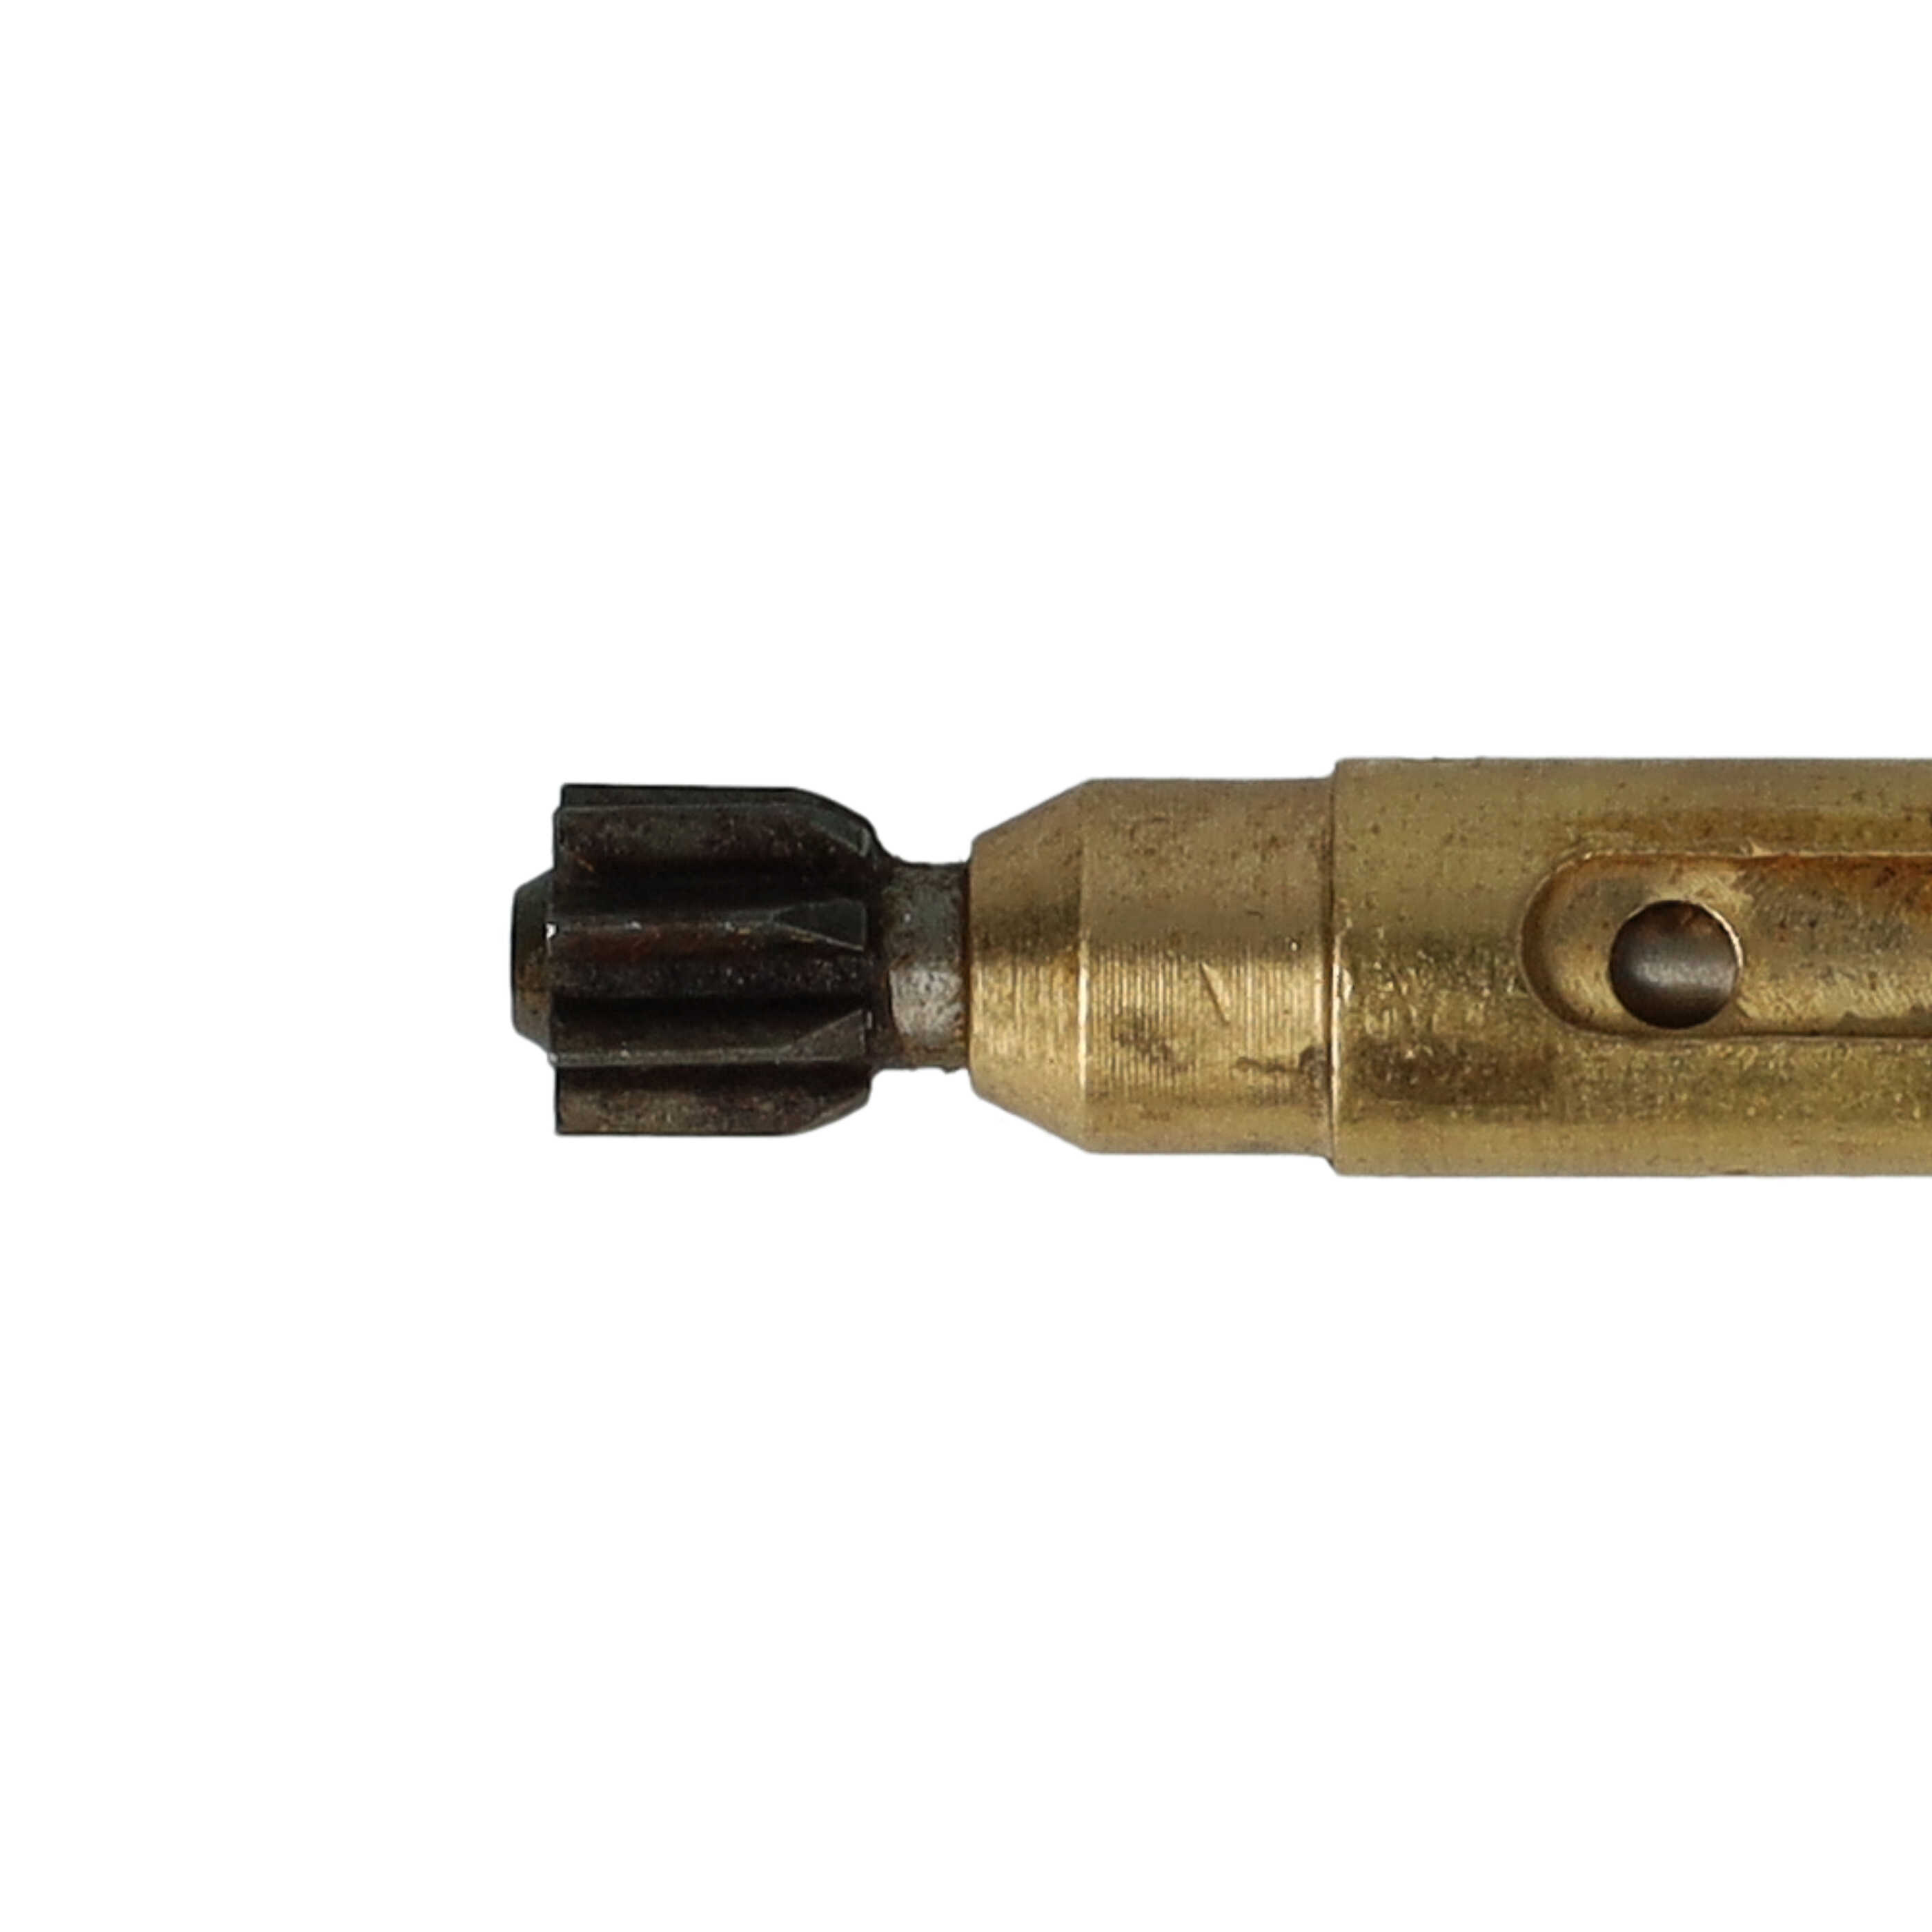 Pompa dell'olio sostituisce Stihl 1123 640 3200 - ferro, 0,8 cm diametro, regolabile 